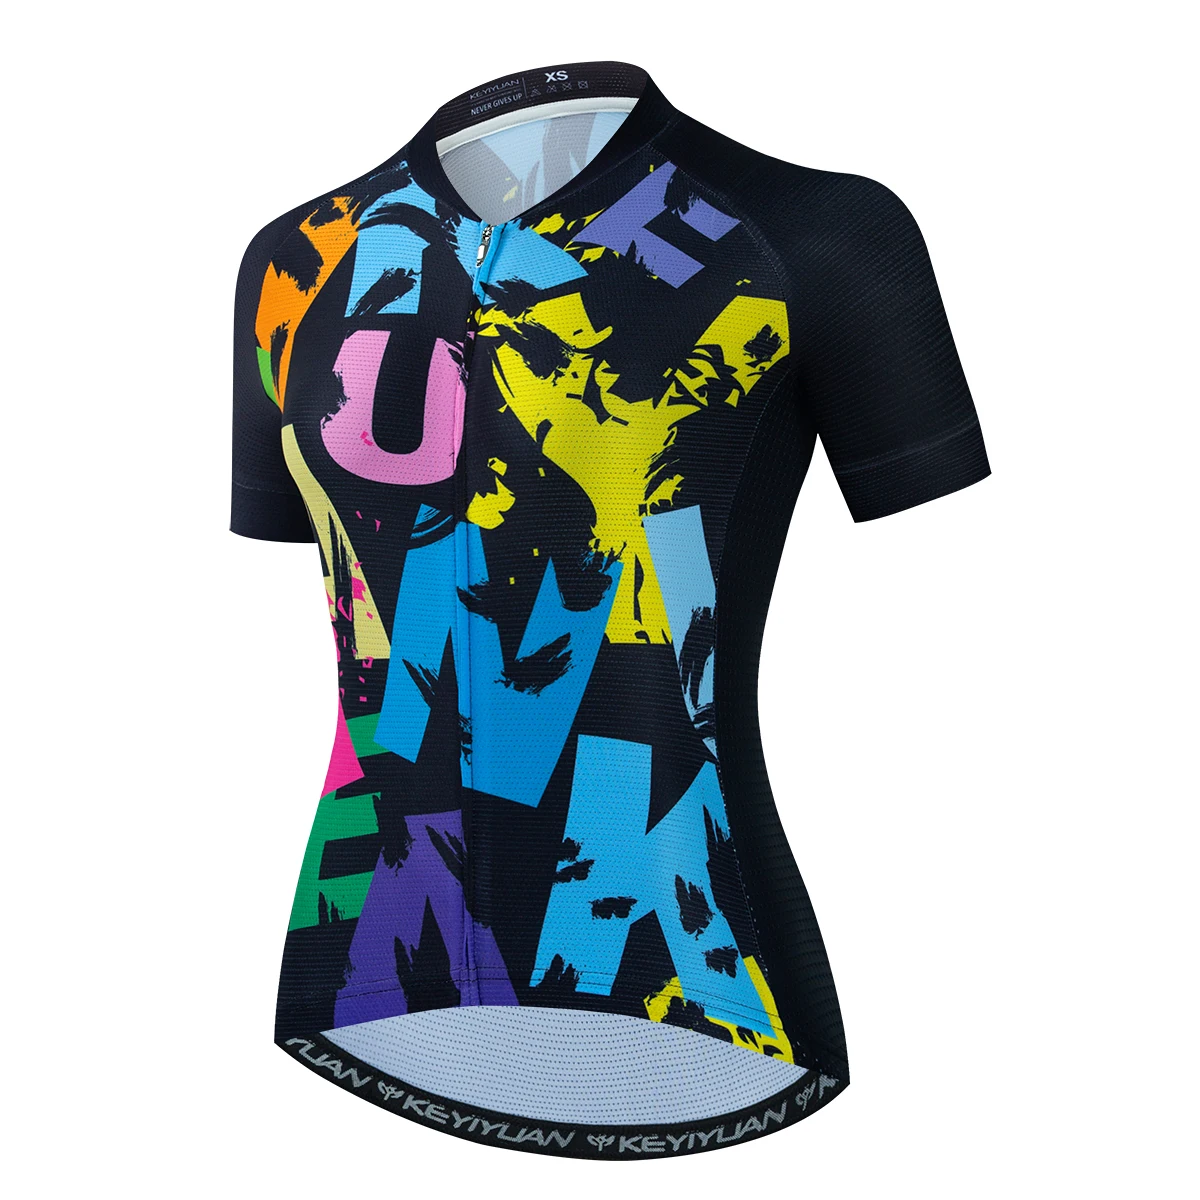 

NEW KEYIYUAN Short Ladies Wear Cycling Shirt Camisas Ciclista Road Bike Jersey Ropa Ciclismo Conjunto Ciclismo Feminino